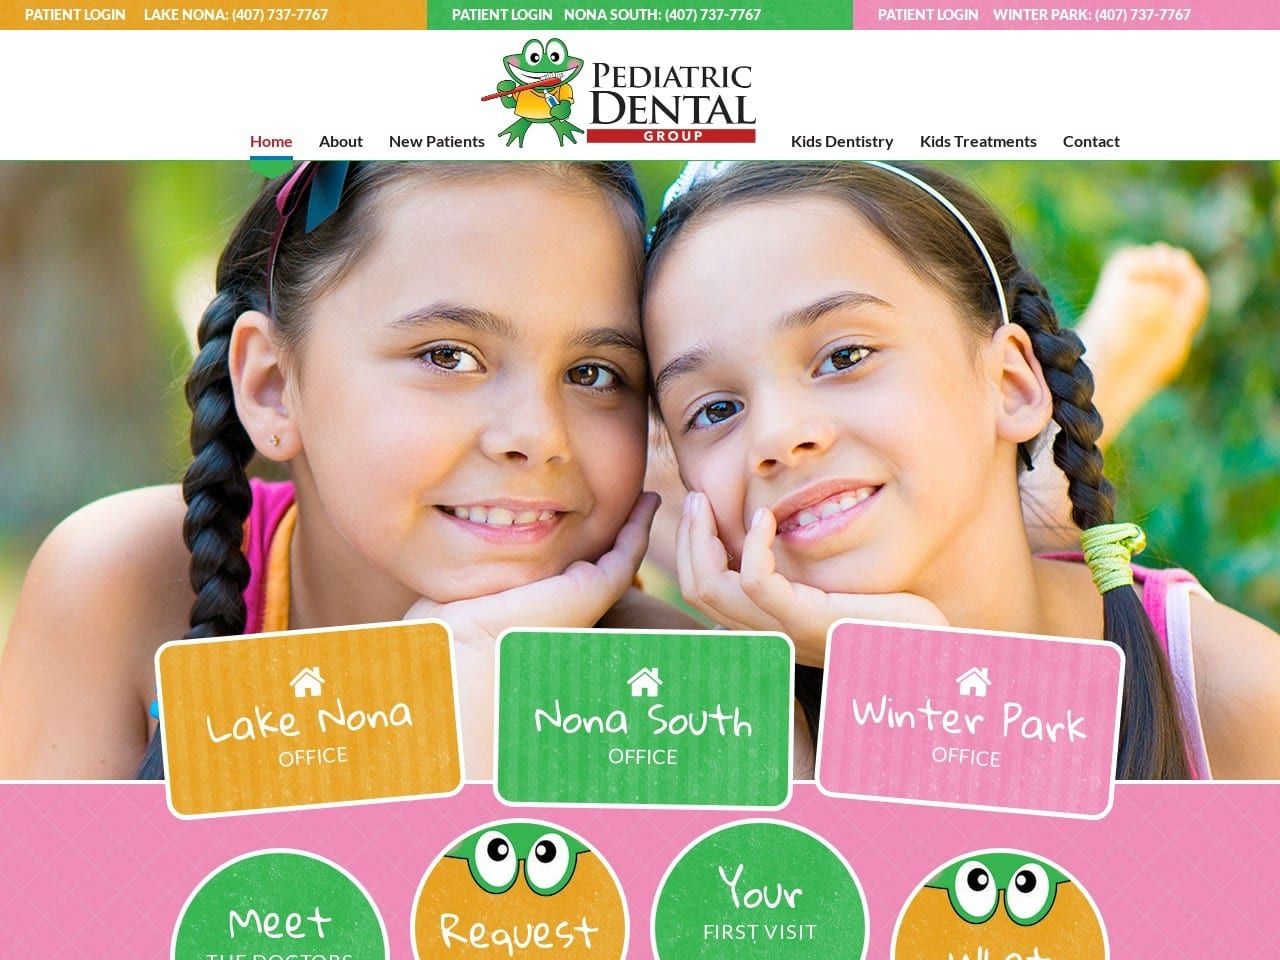 Pediatric Dental Group Website Screenshot from pediatricdentalgroupflorida.com